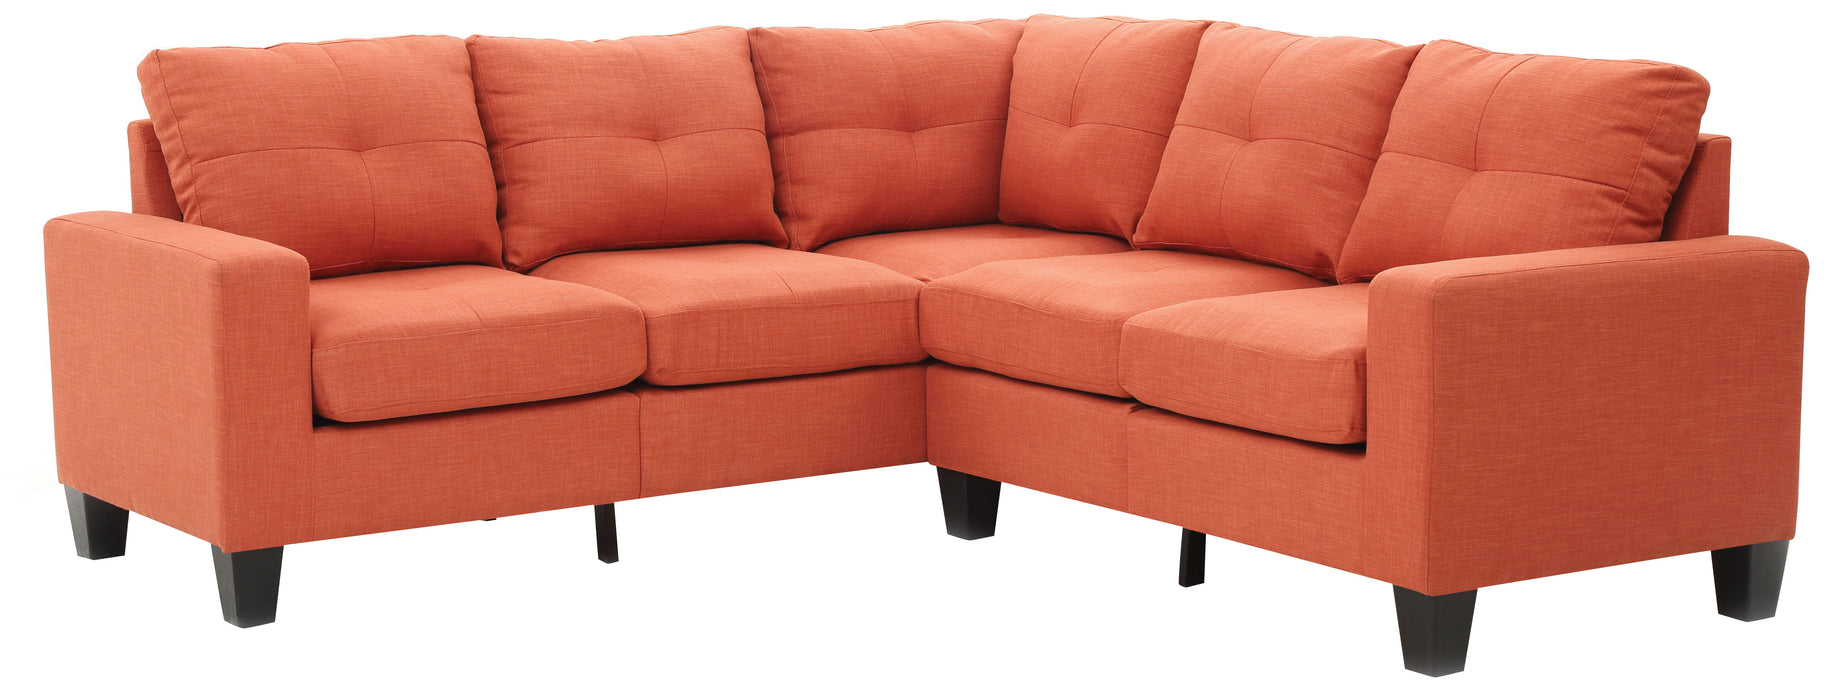 Glory Furniture Newbury Sectional, Orange